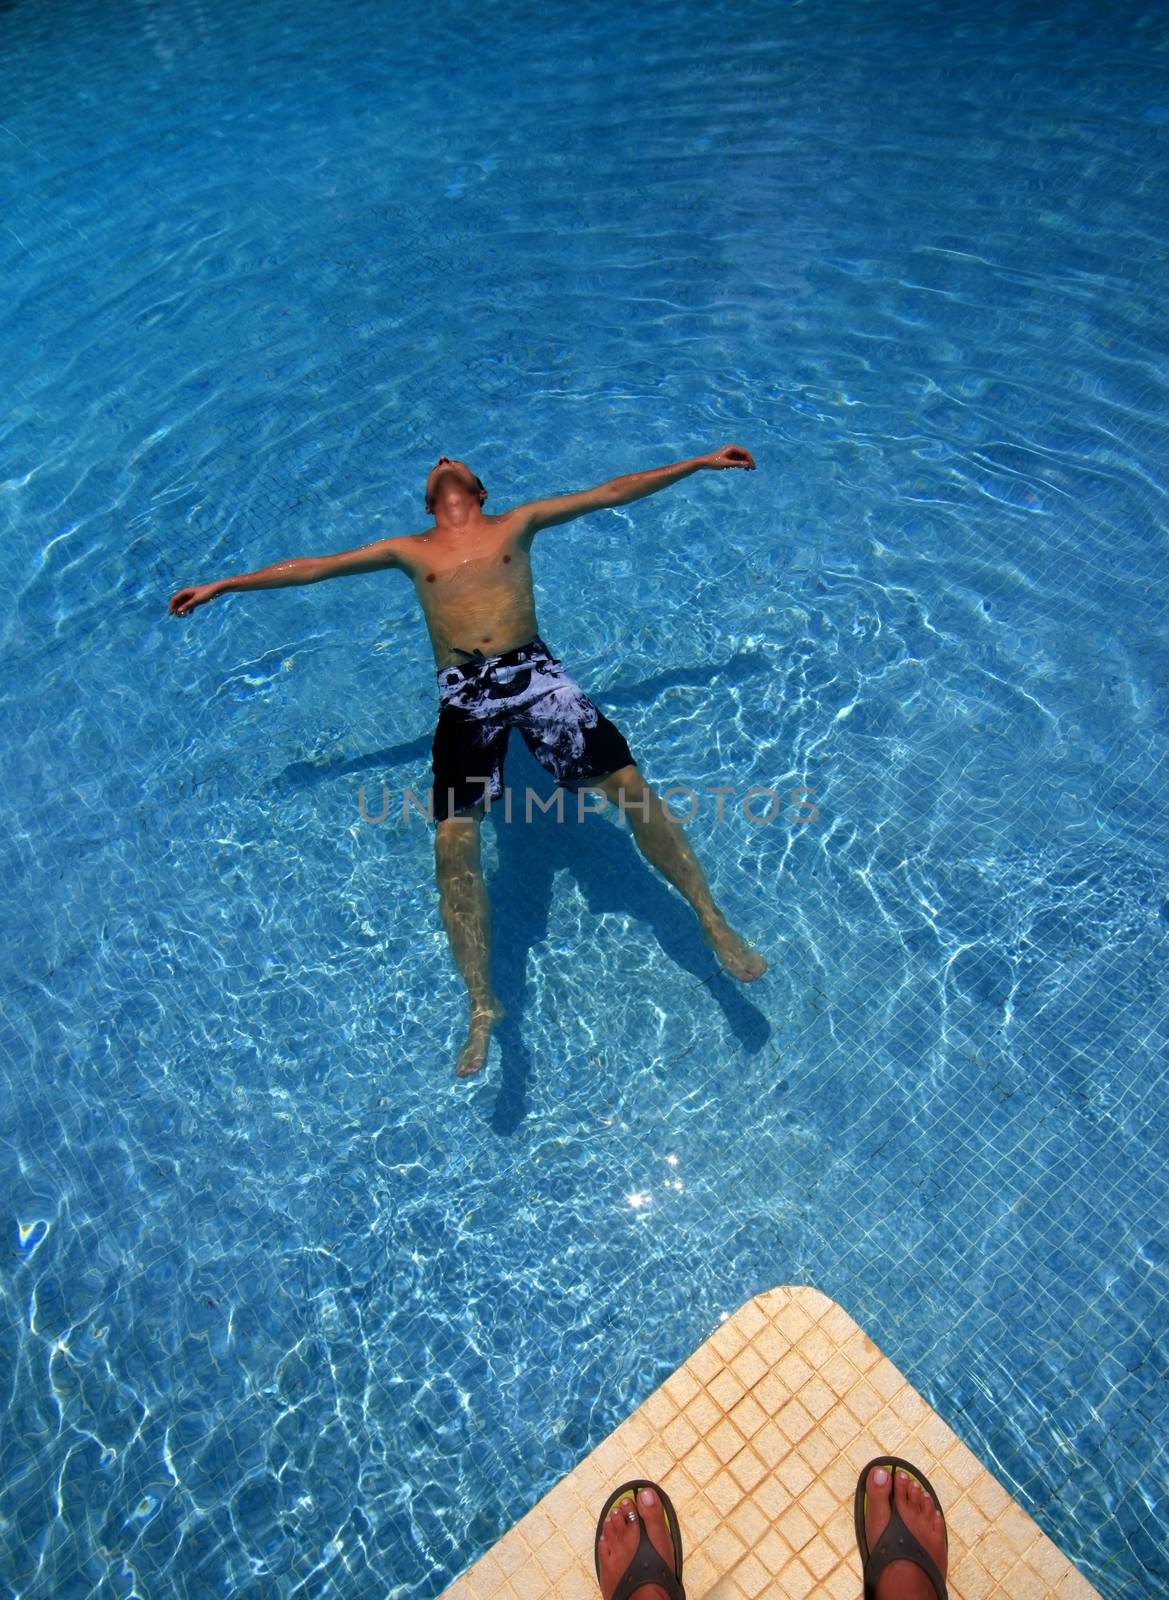 Man enjoying summer in the pool